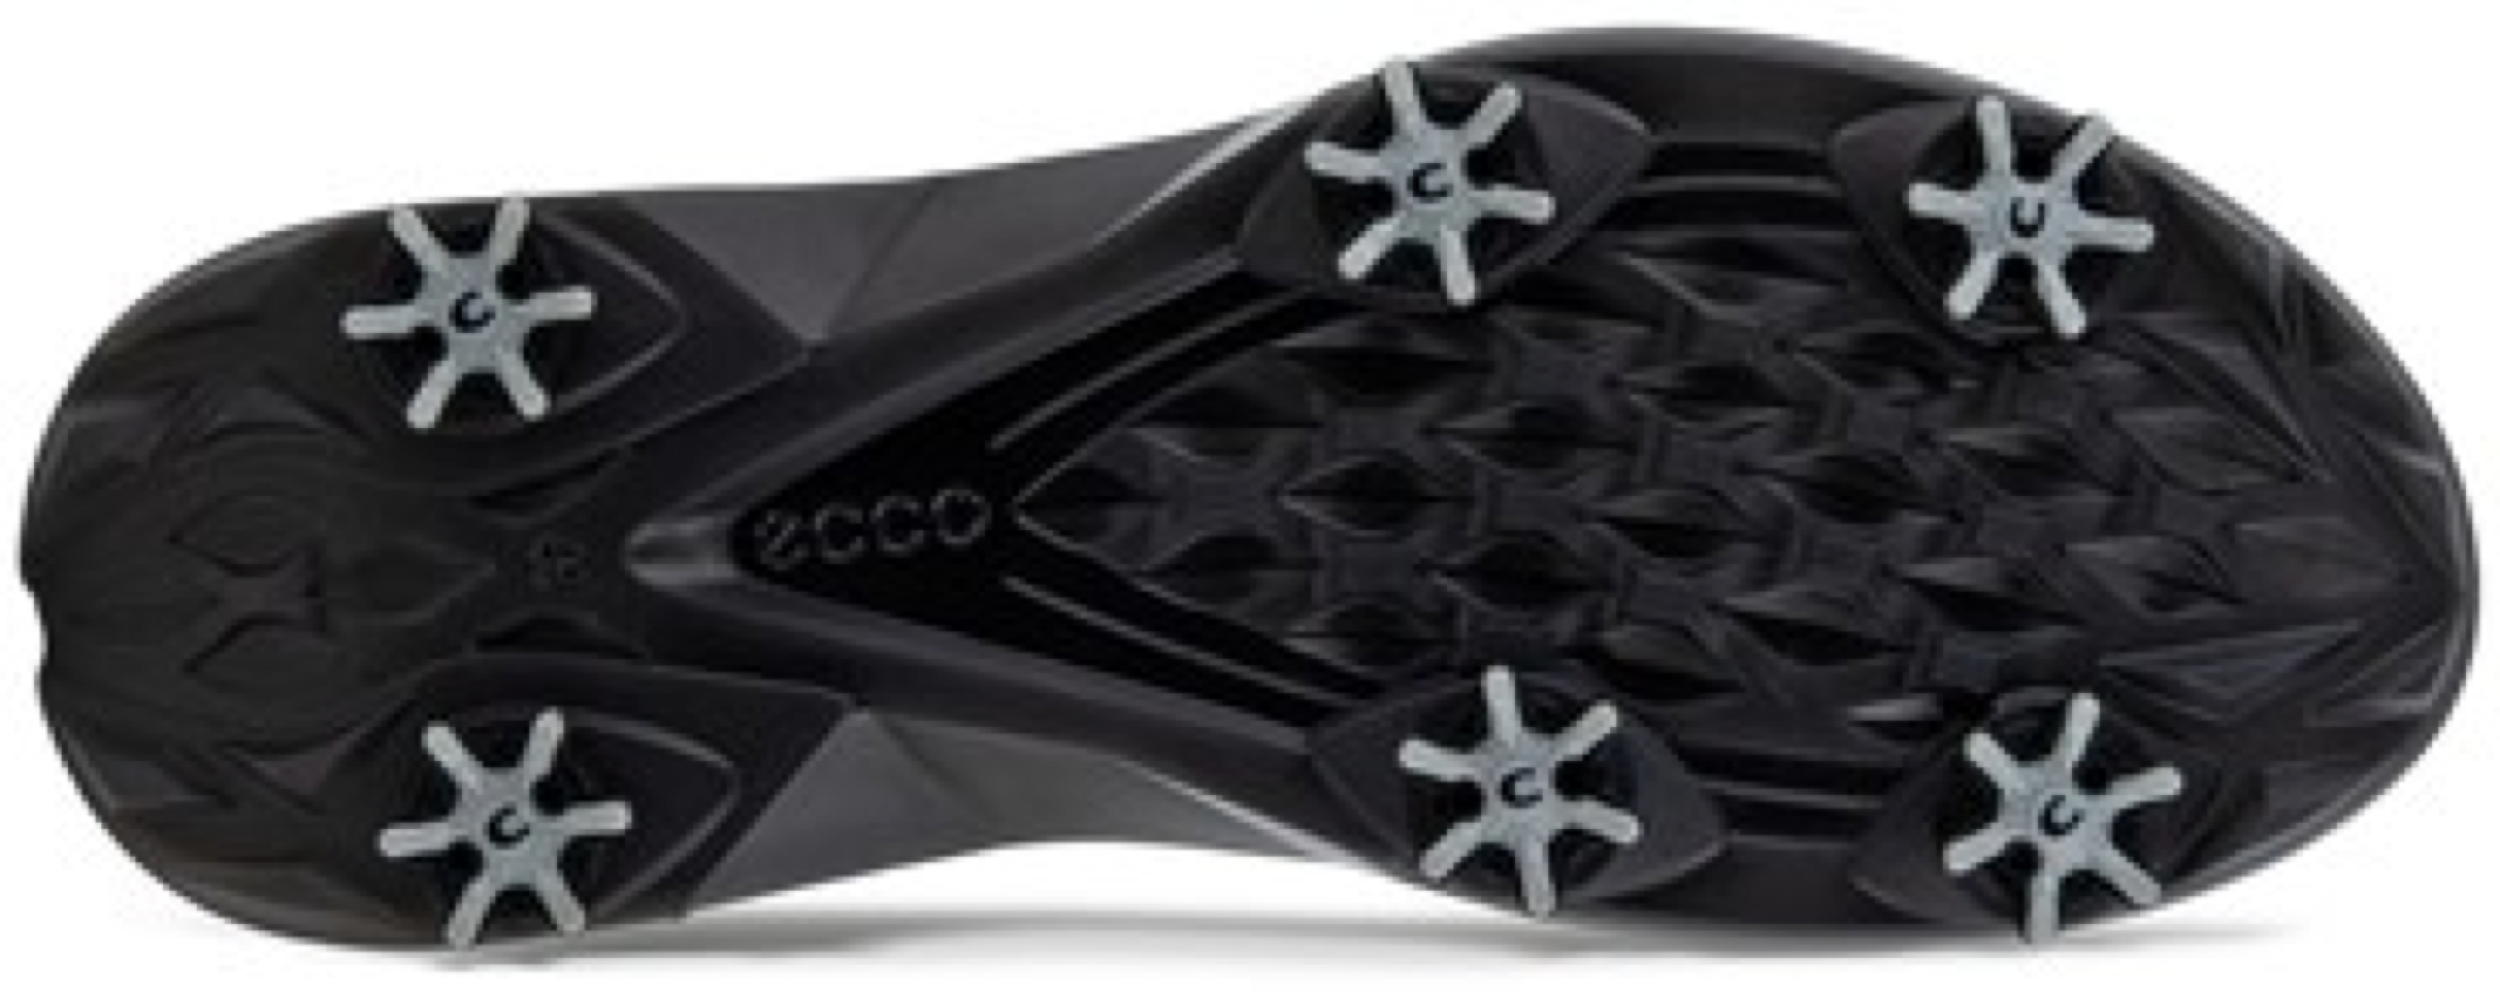 ECCO Golf Biom G5 Gore-Tex Golfschuh, black/steel